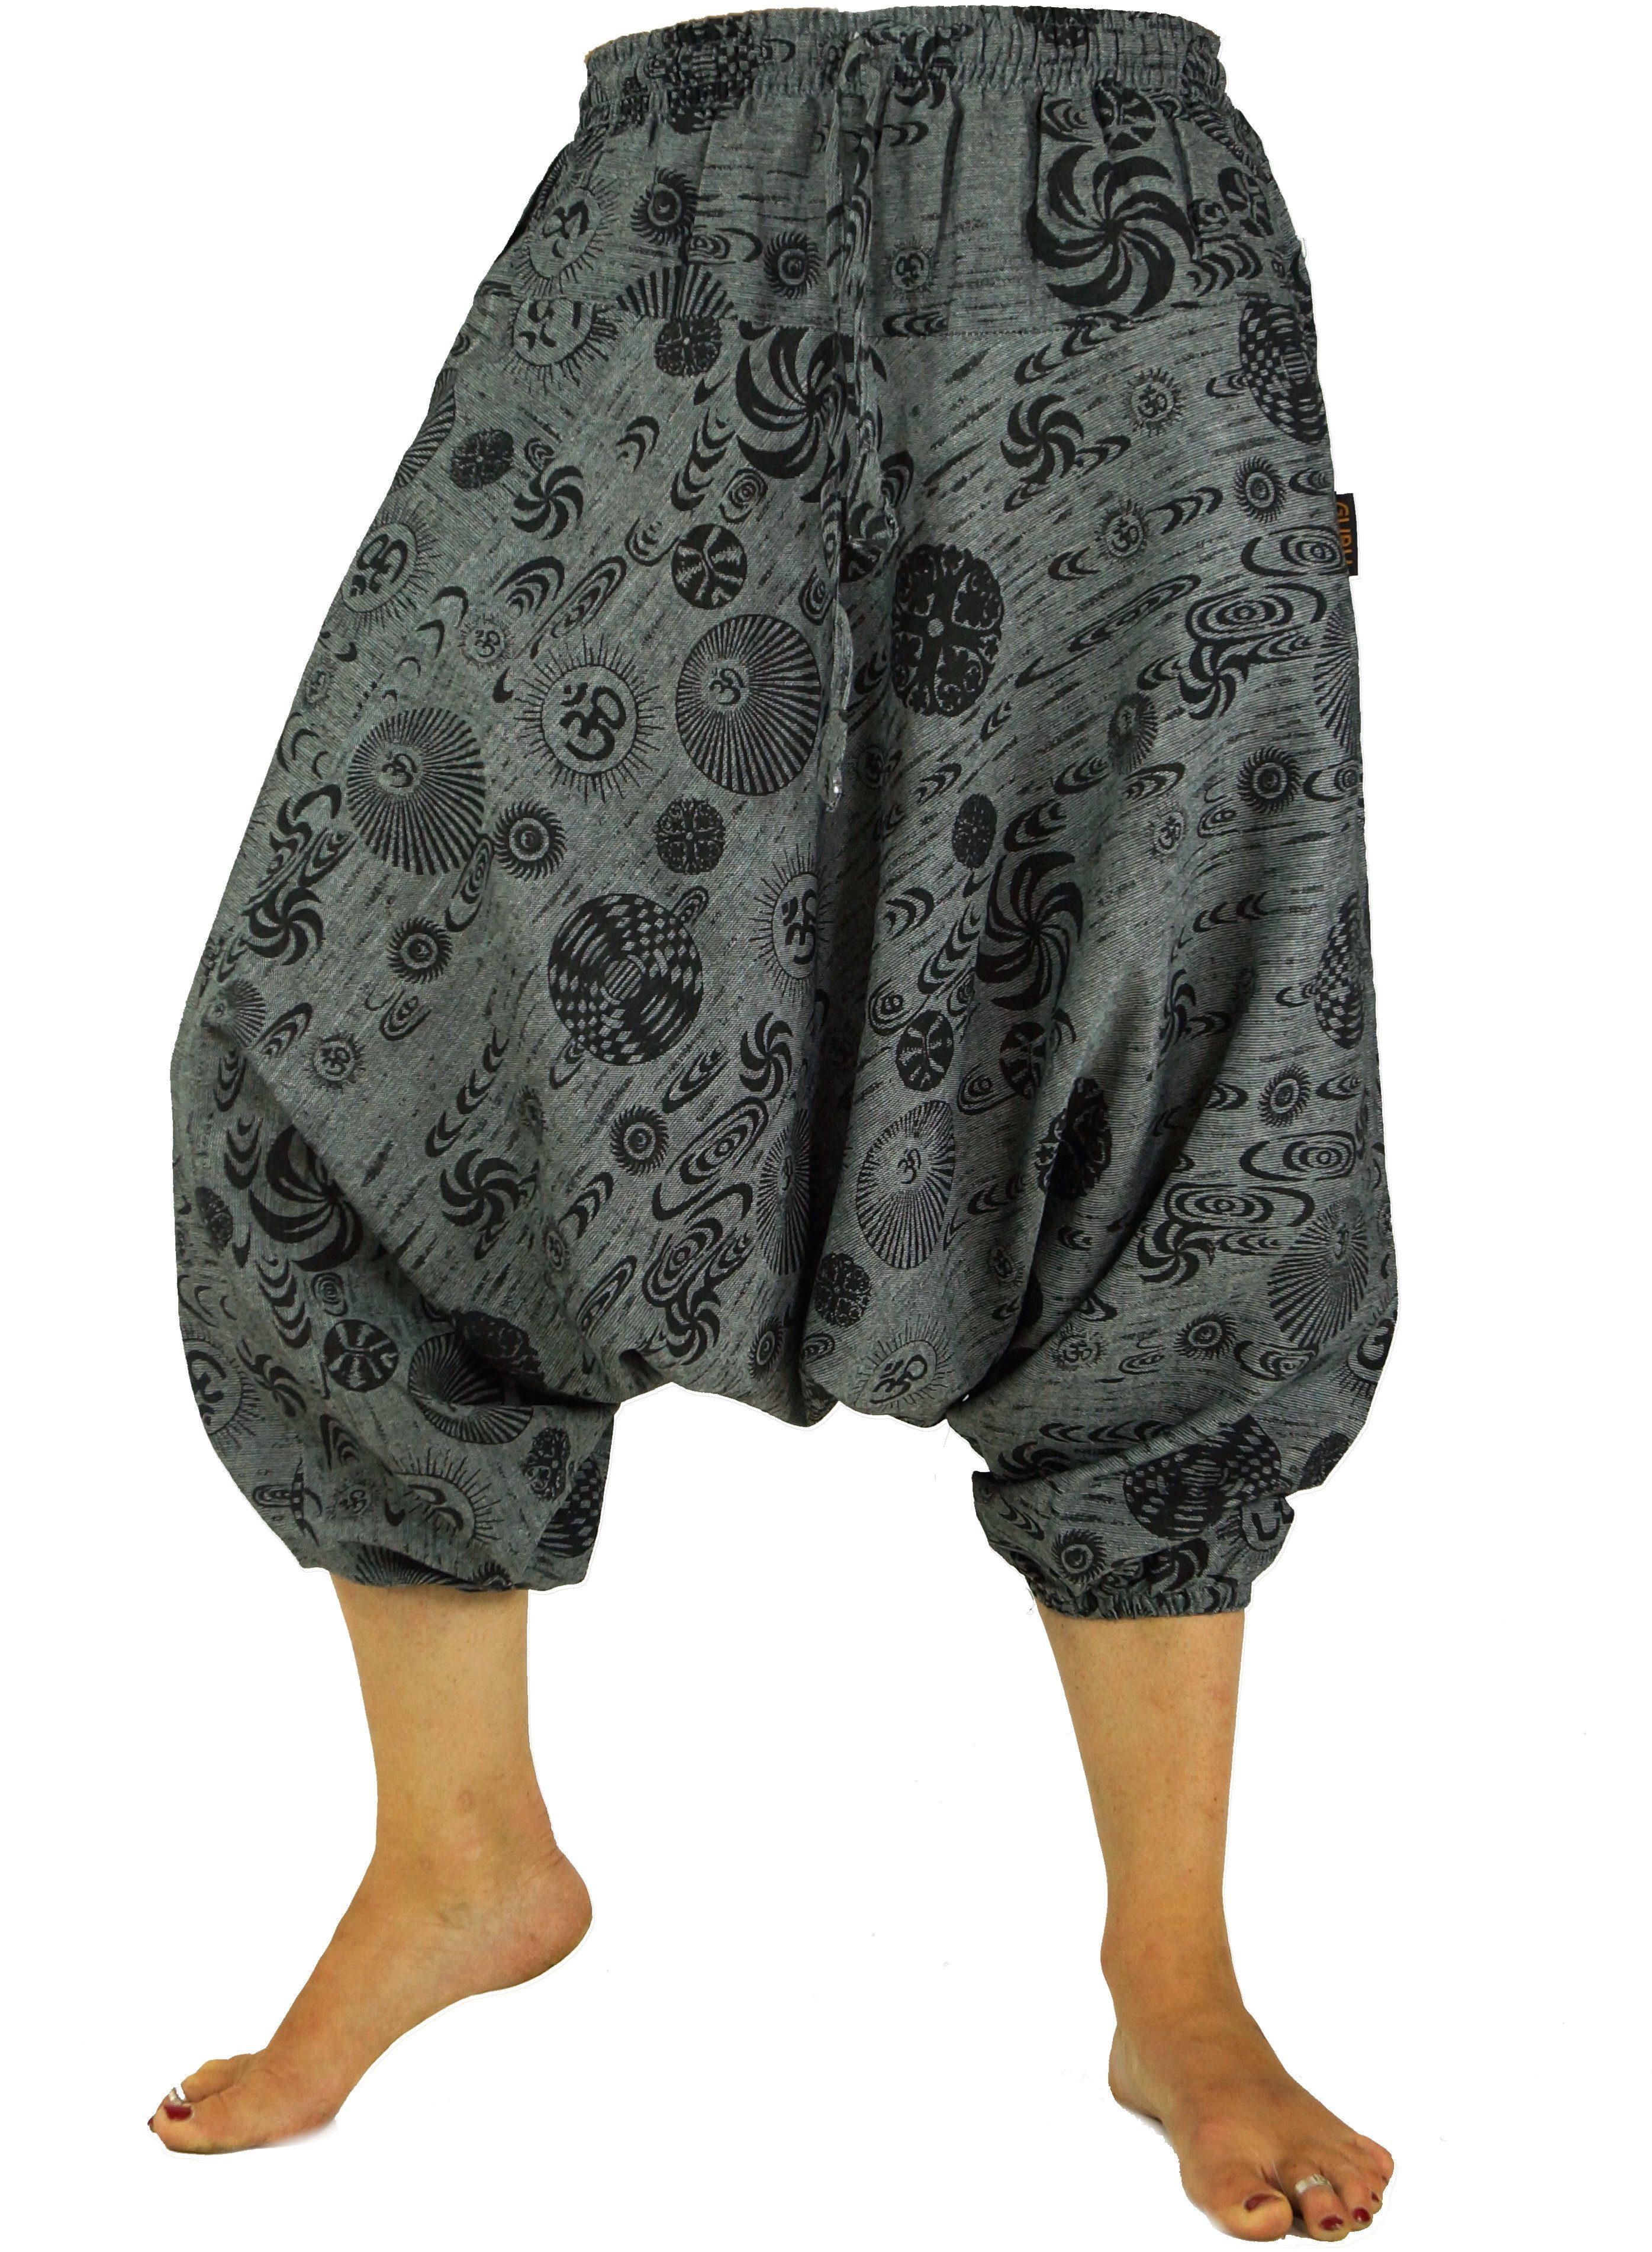 Guru-Shop Relaxhose Aladinhose Pluderhose Shorts 7/8 Länge - grau Ethno Style, alternative Bekleidung